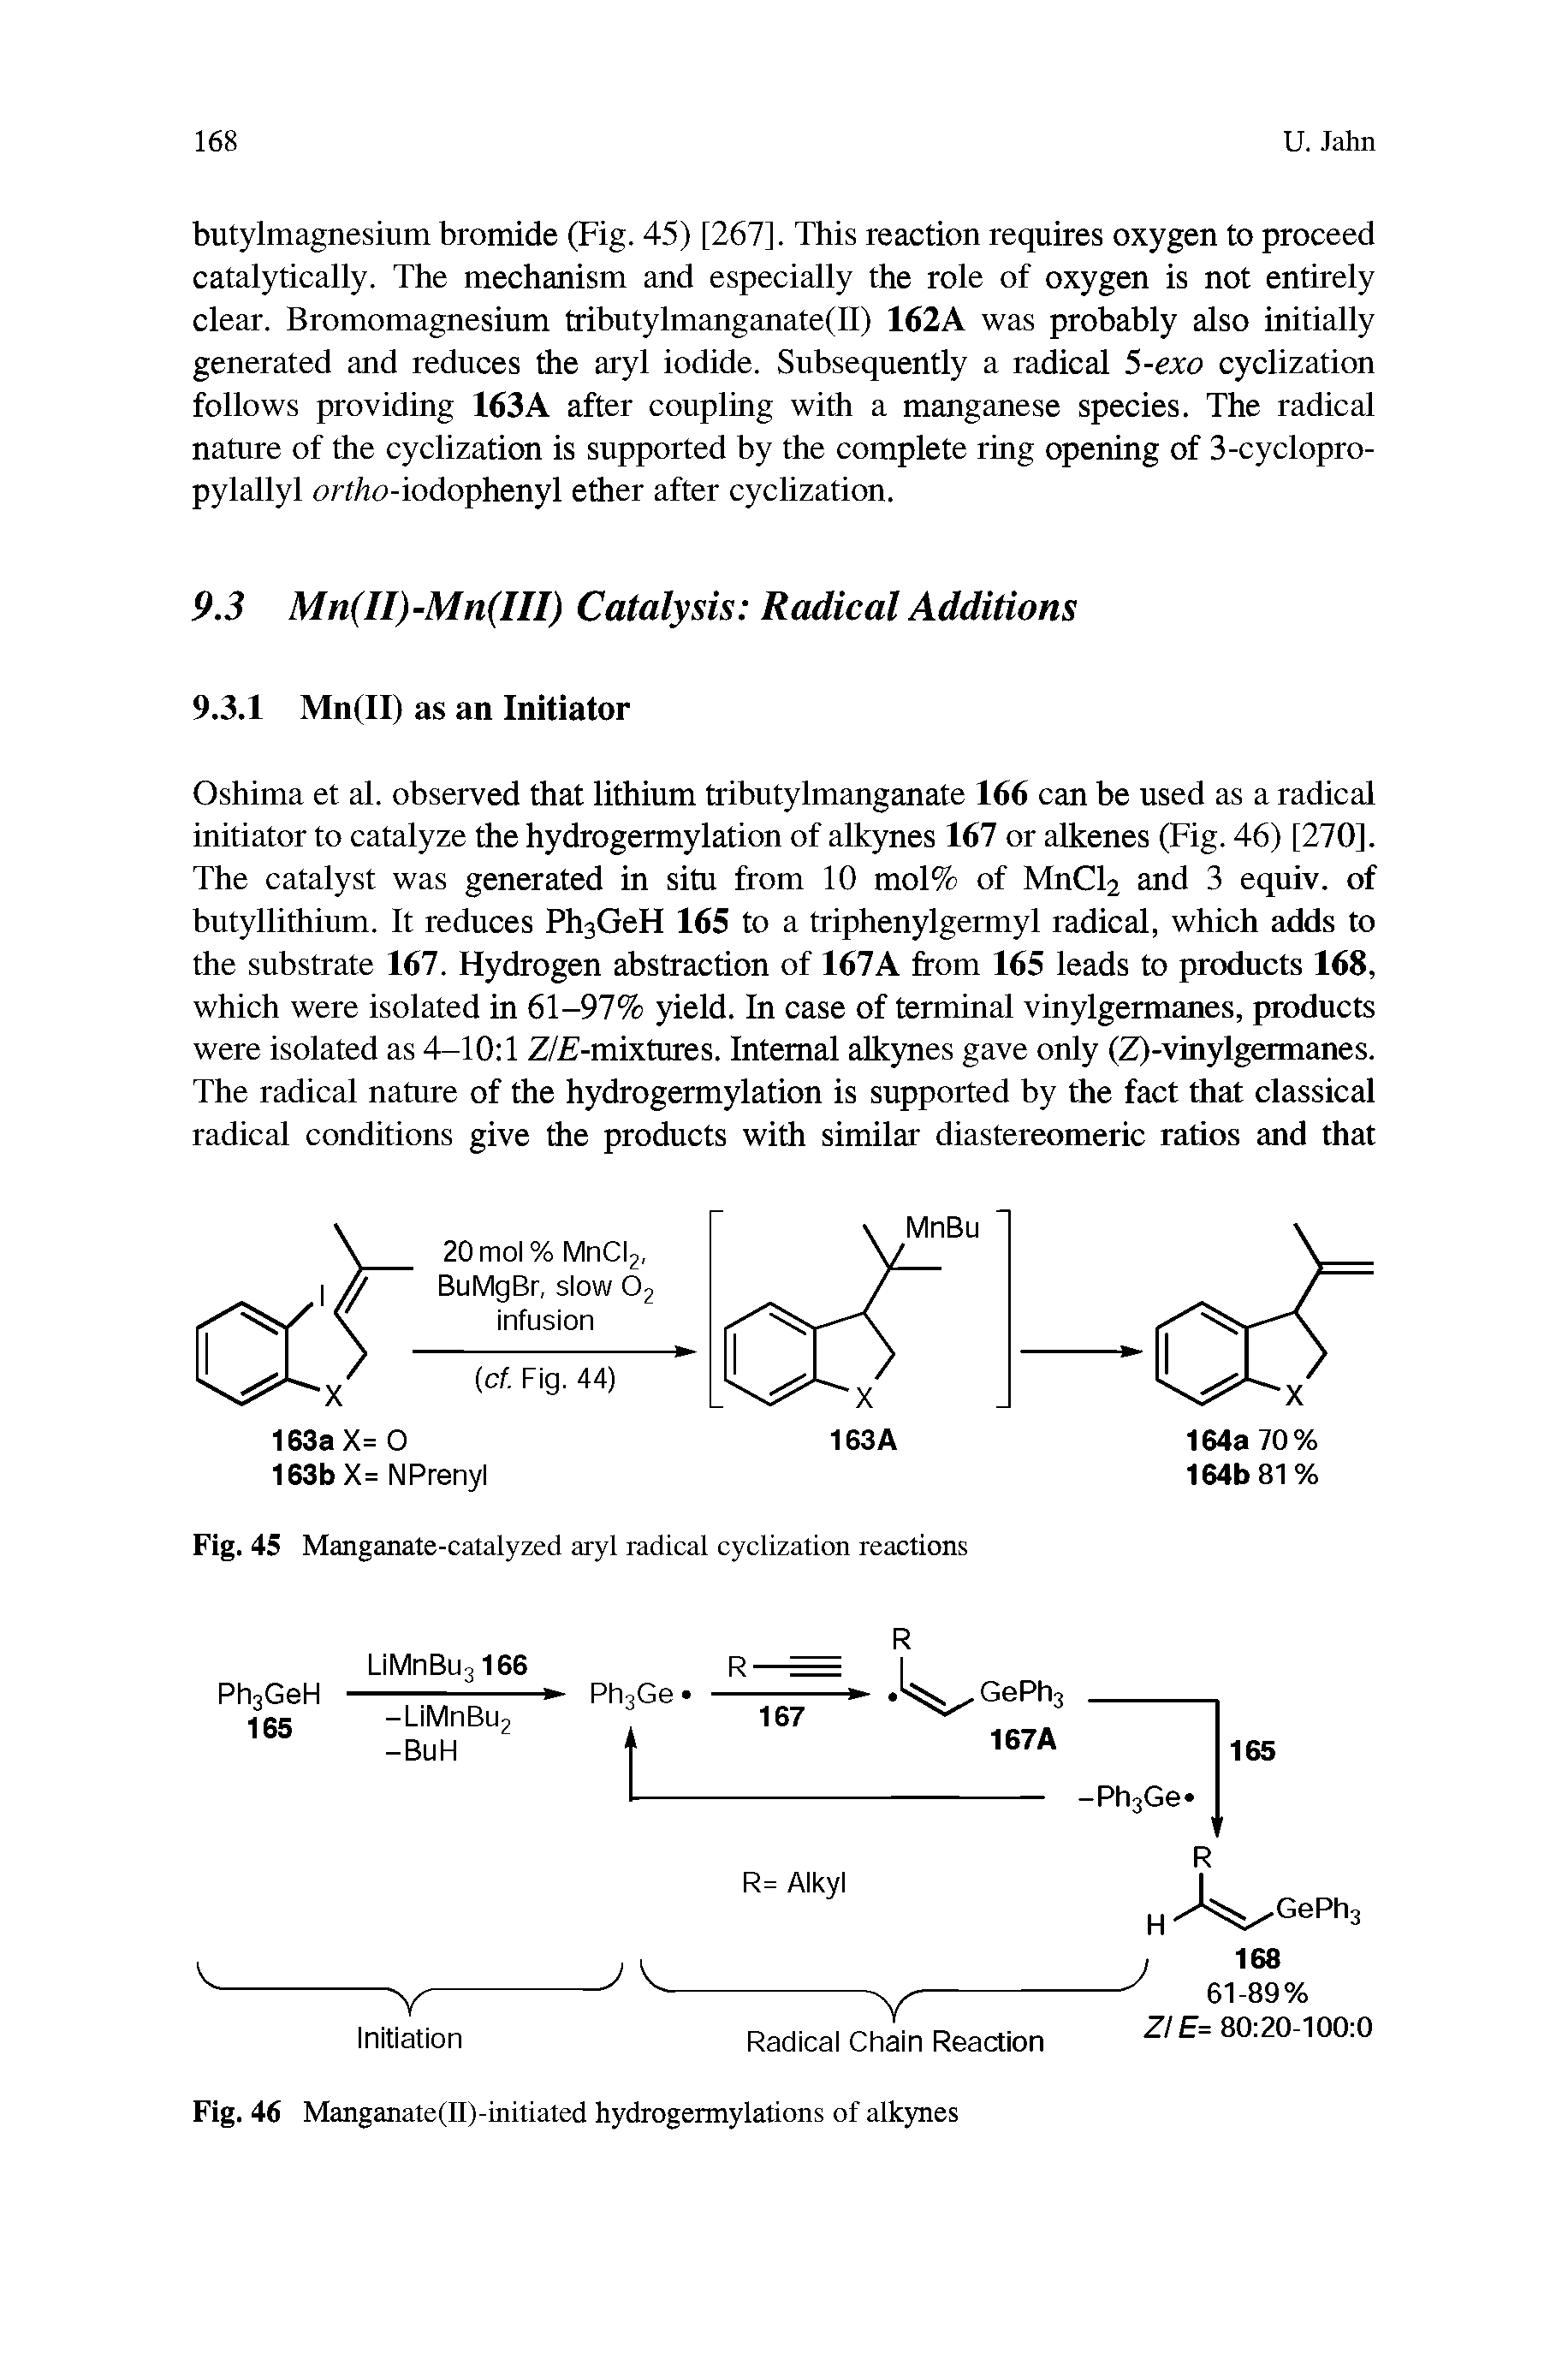 Fig. 45 Manganate-catalyzed aryl radical cyclization reactions...